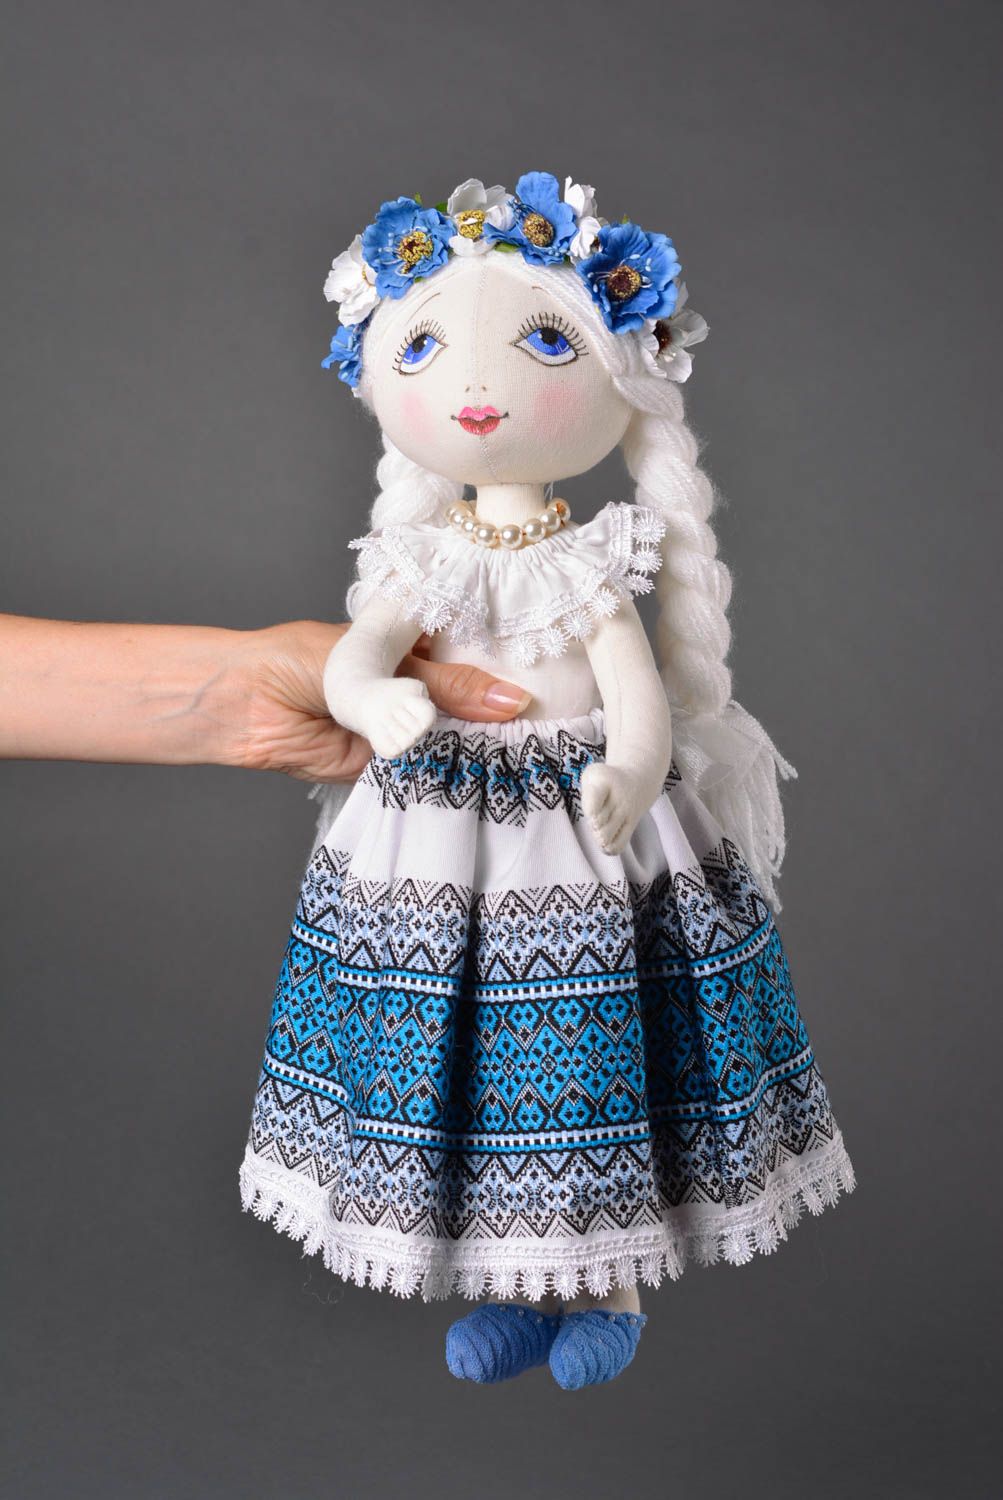 Handmade doll unusual toy for girls interior toy designer doll decor ideas photo 4